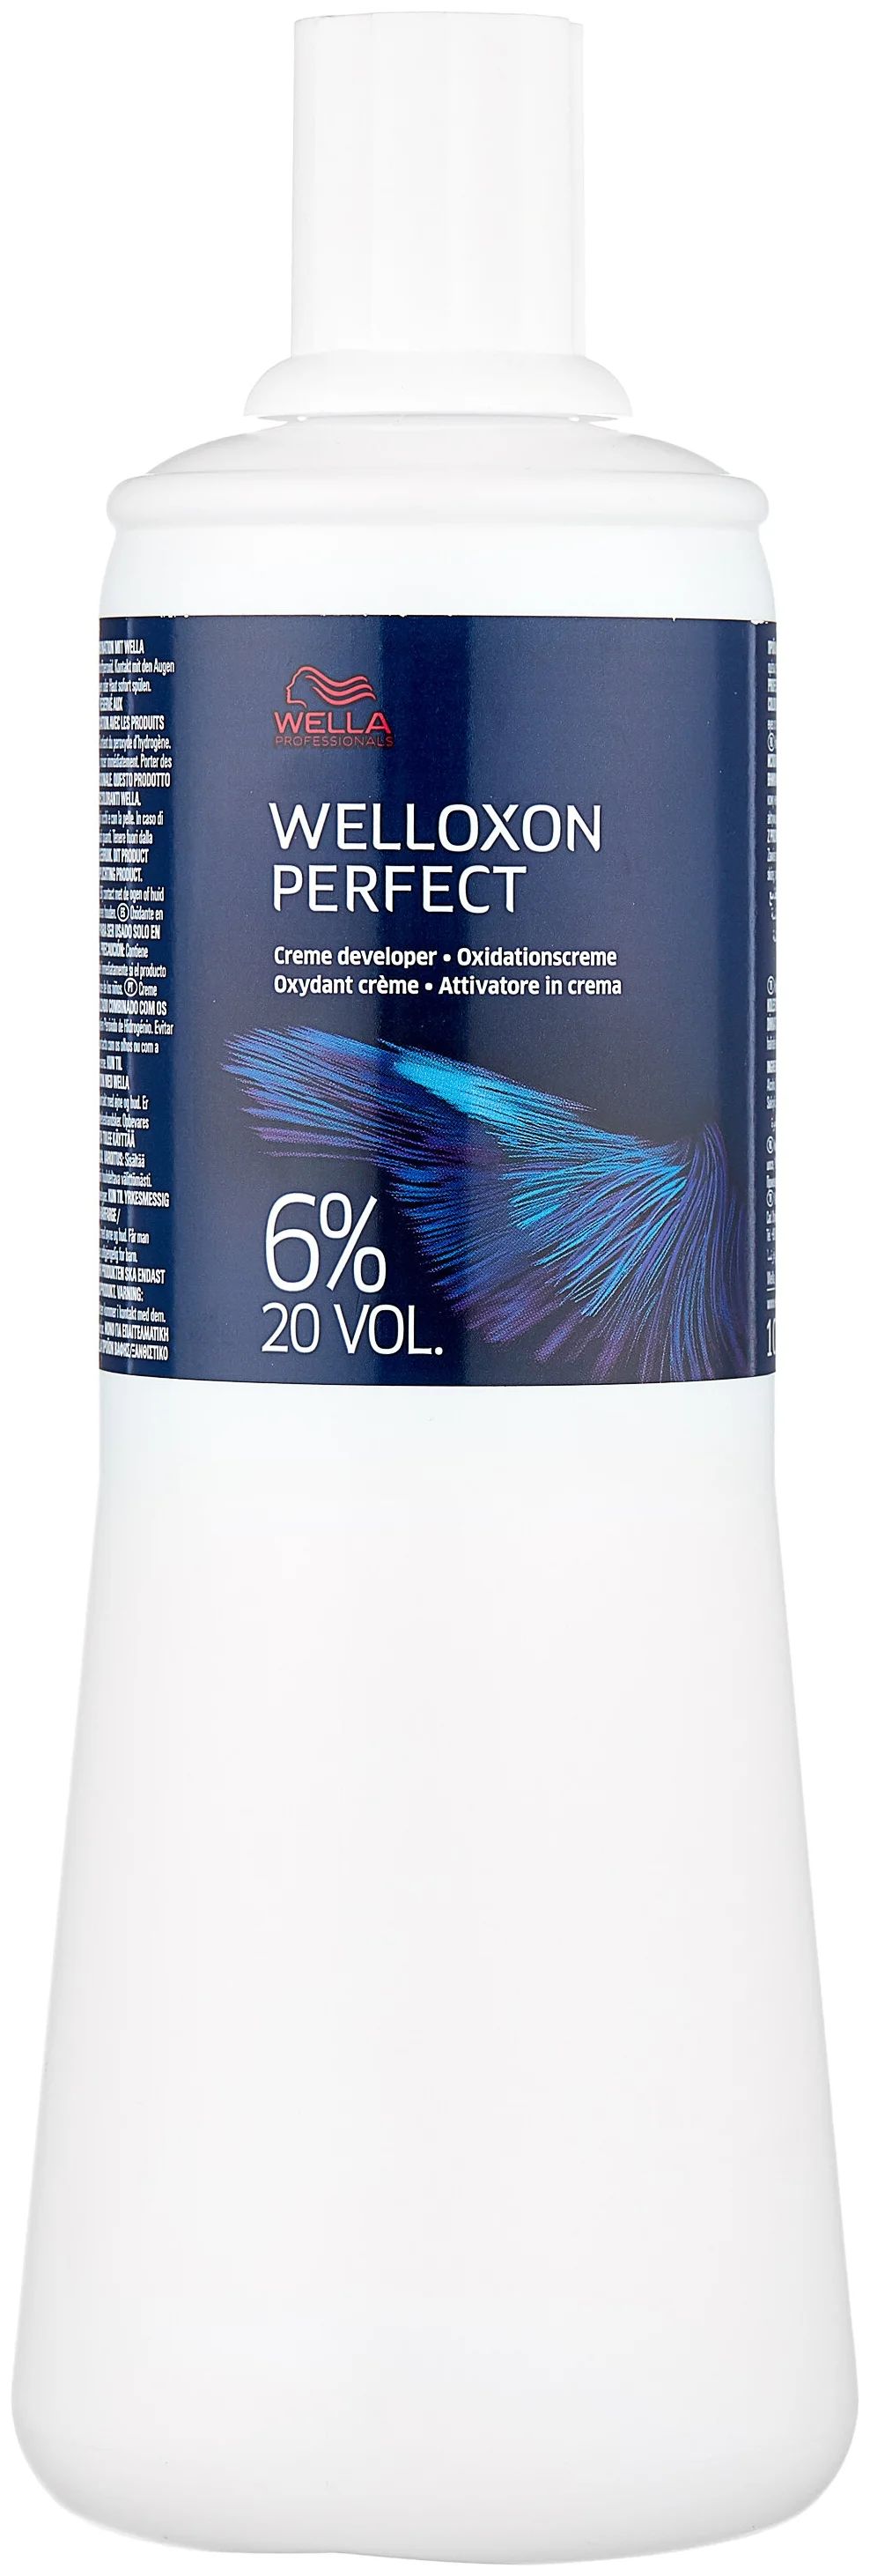 Краска для волос Wella Welloxon Koleston Perfect 6% крем-проявитель, 1 л крем проявитель 12% 40 vol